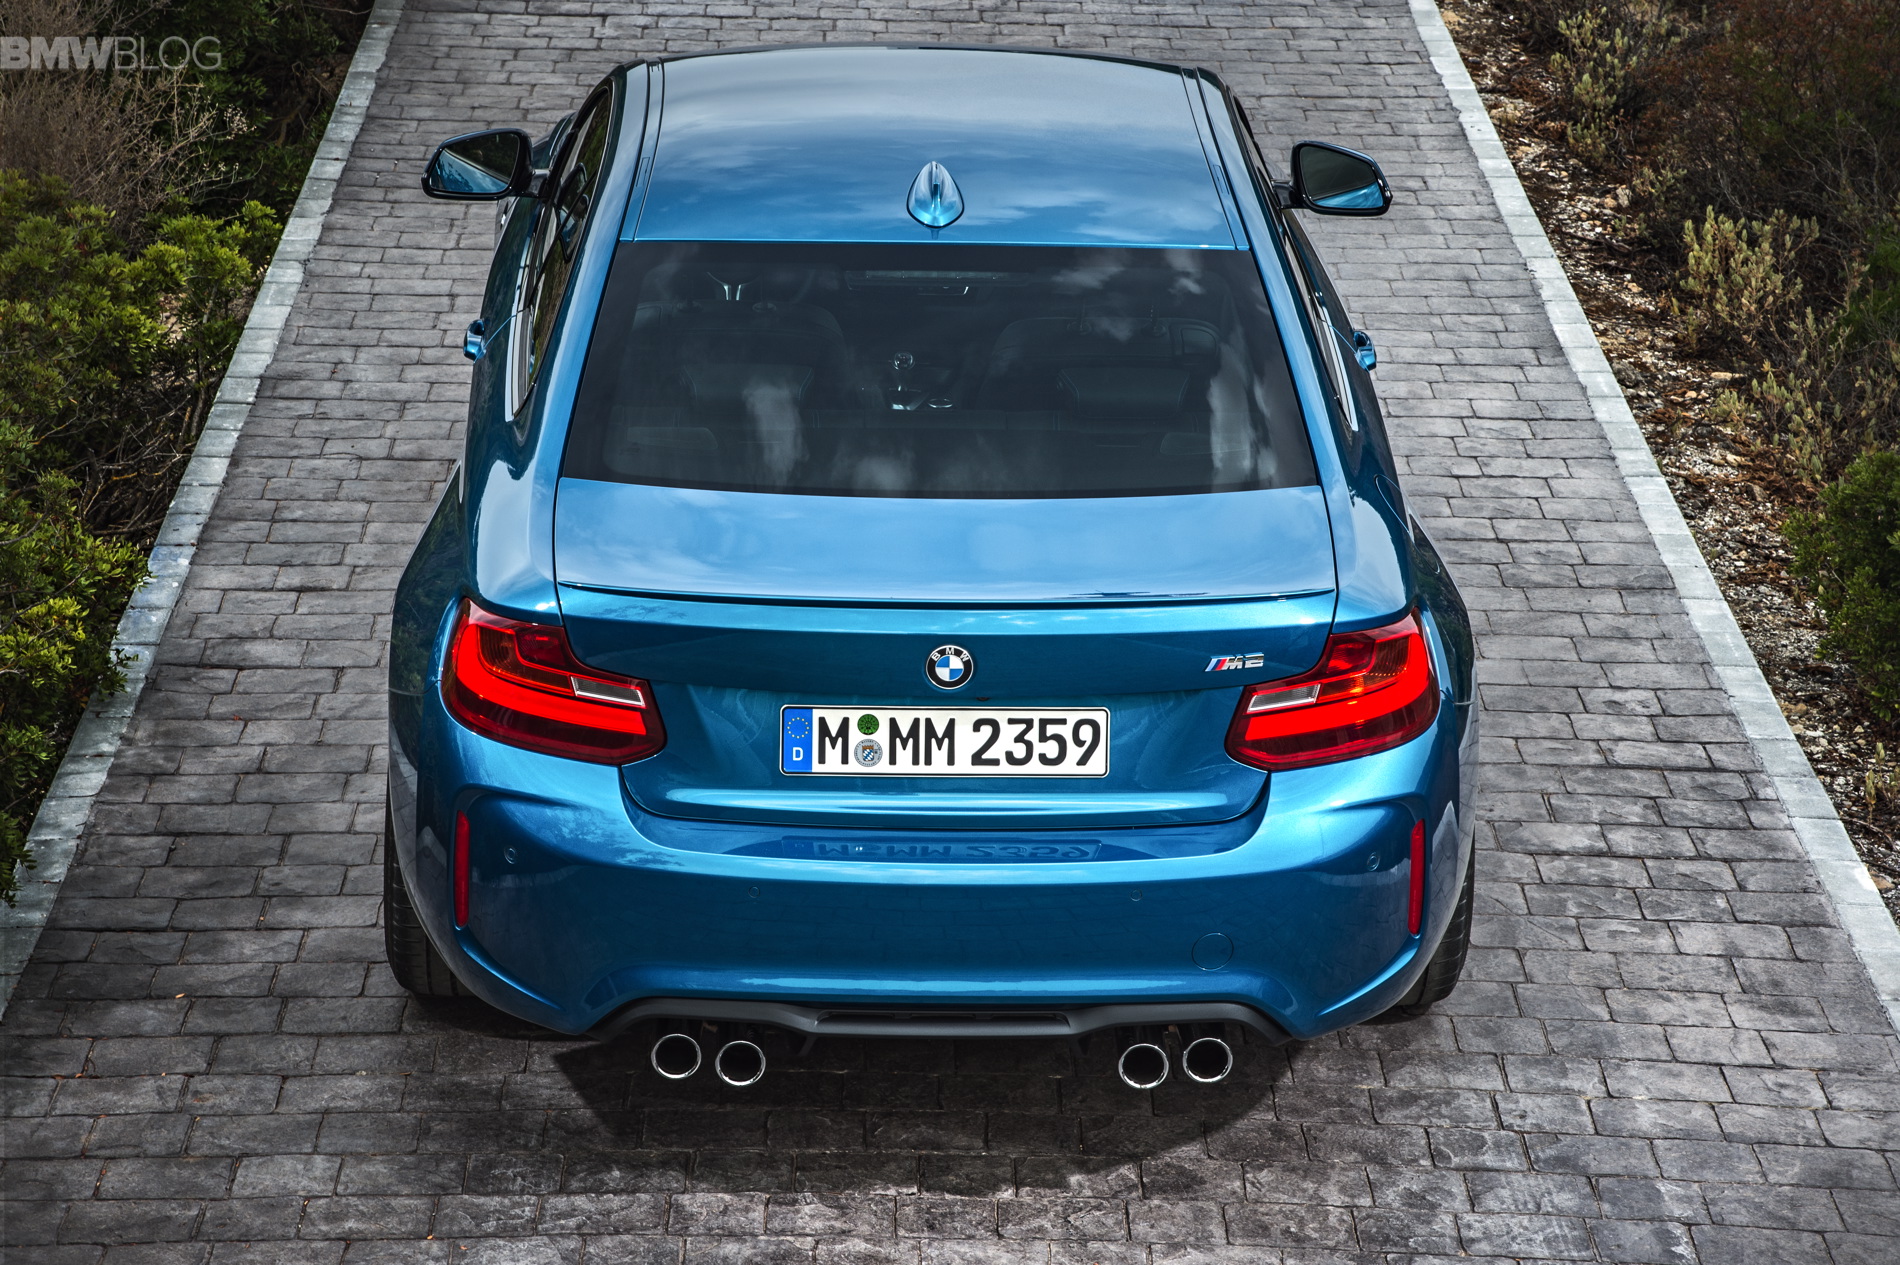 BMW M2 images 06